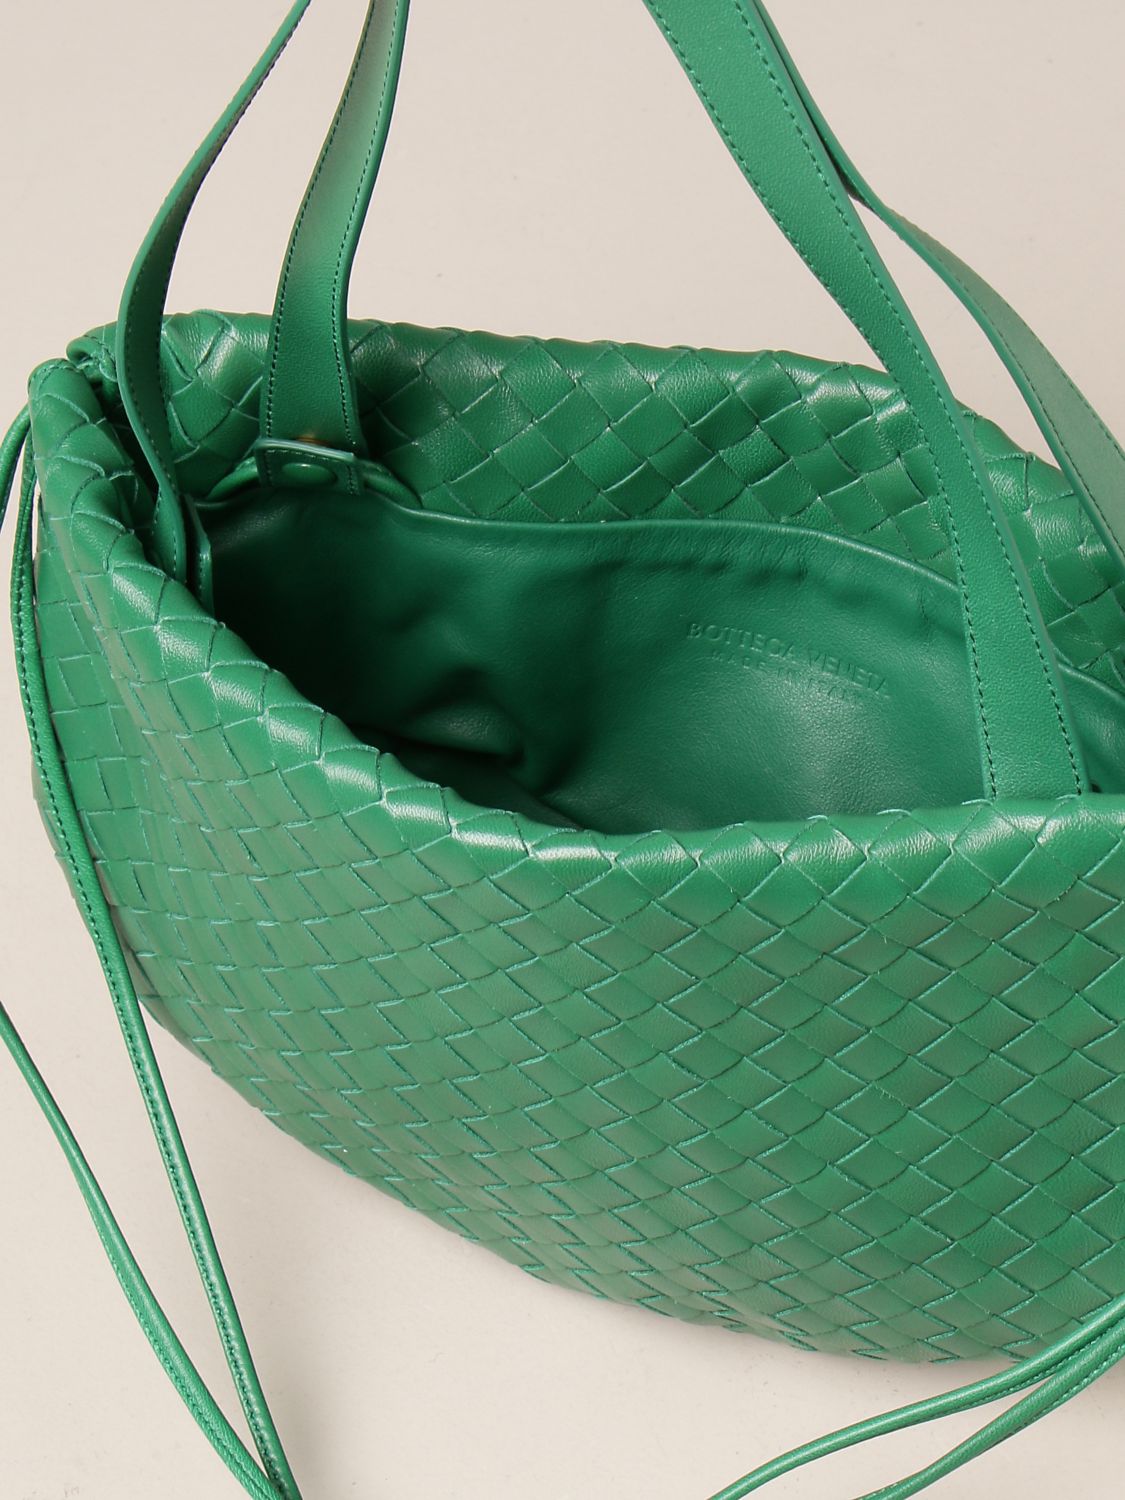 BOTTEGA VENETA: The Bulb bag in woven nappa - Green | Shoulder Bag ...